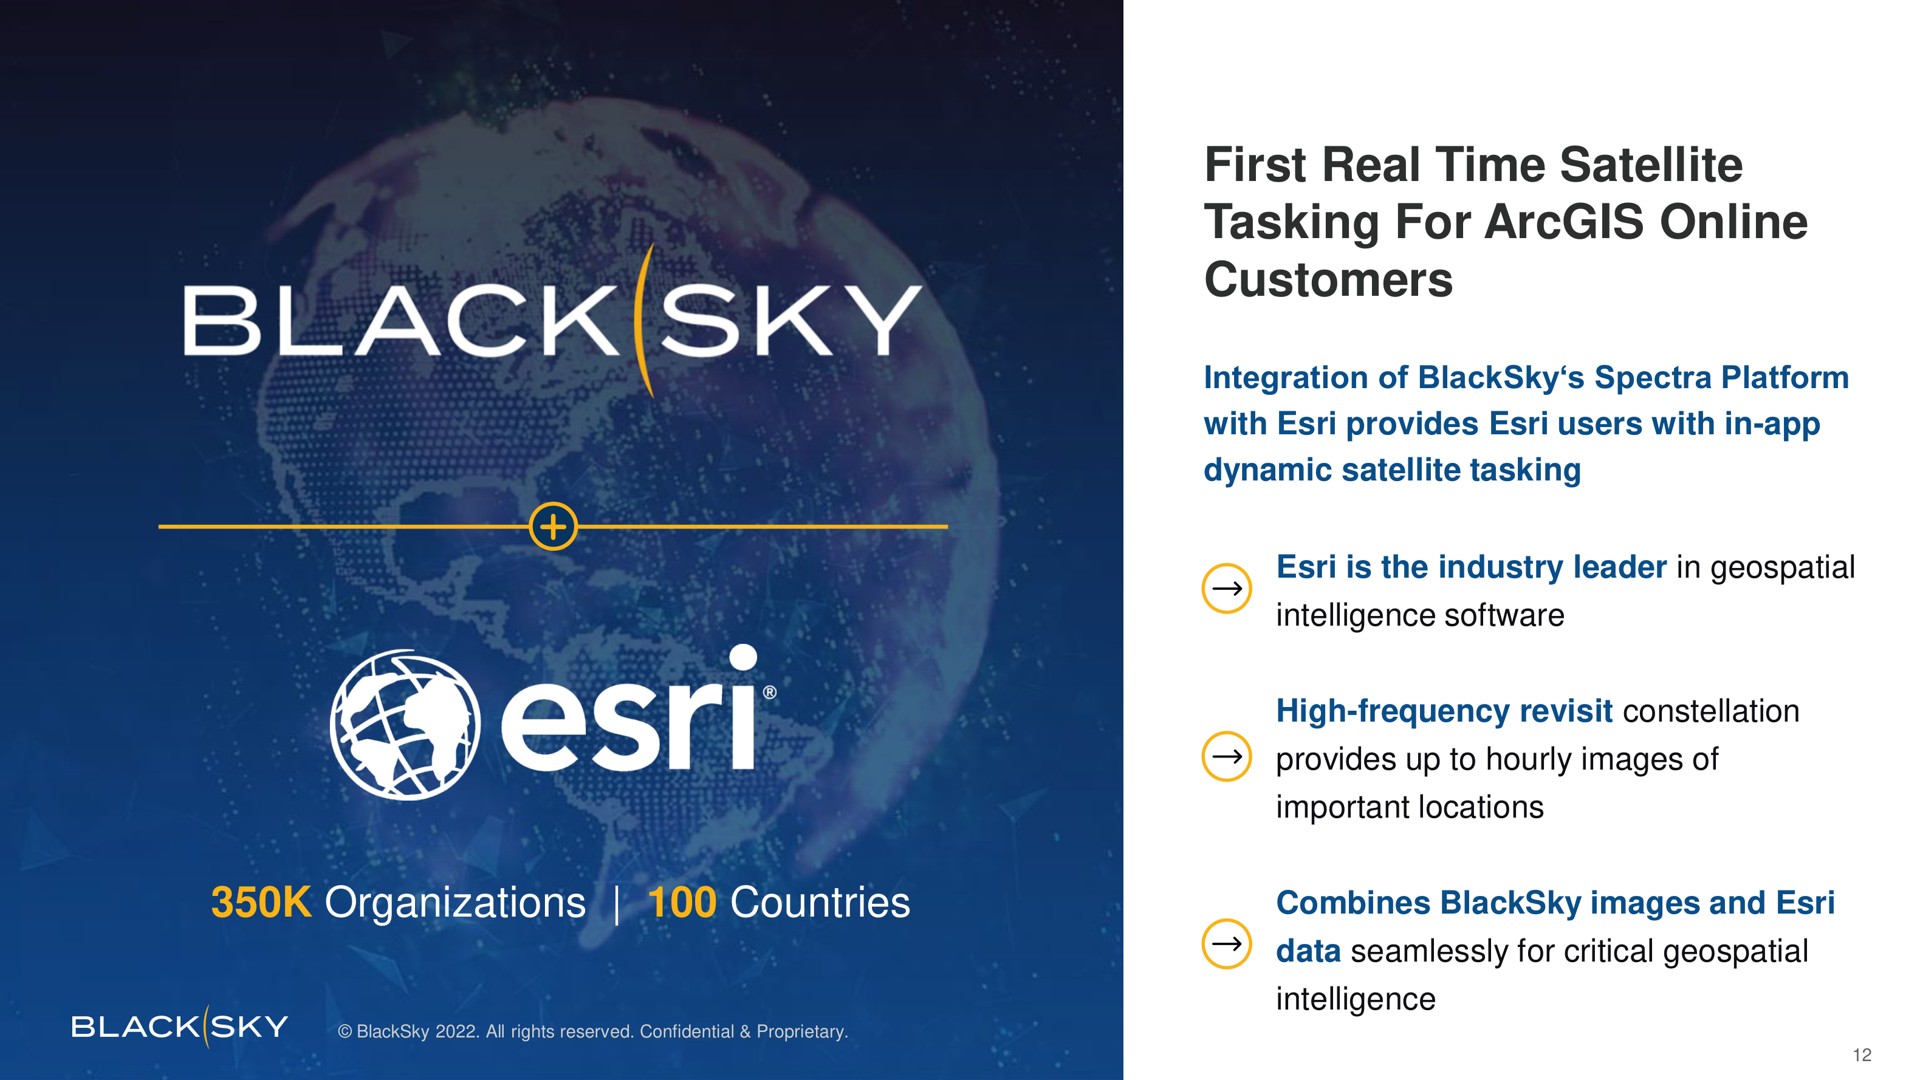 first real time satellite tasking for customers black sky | BlackSky